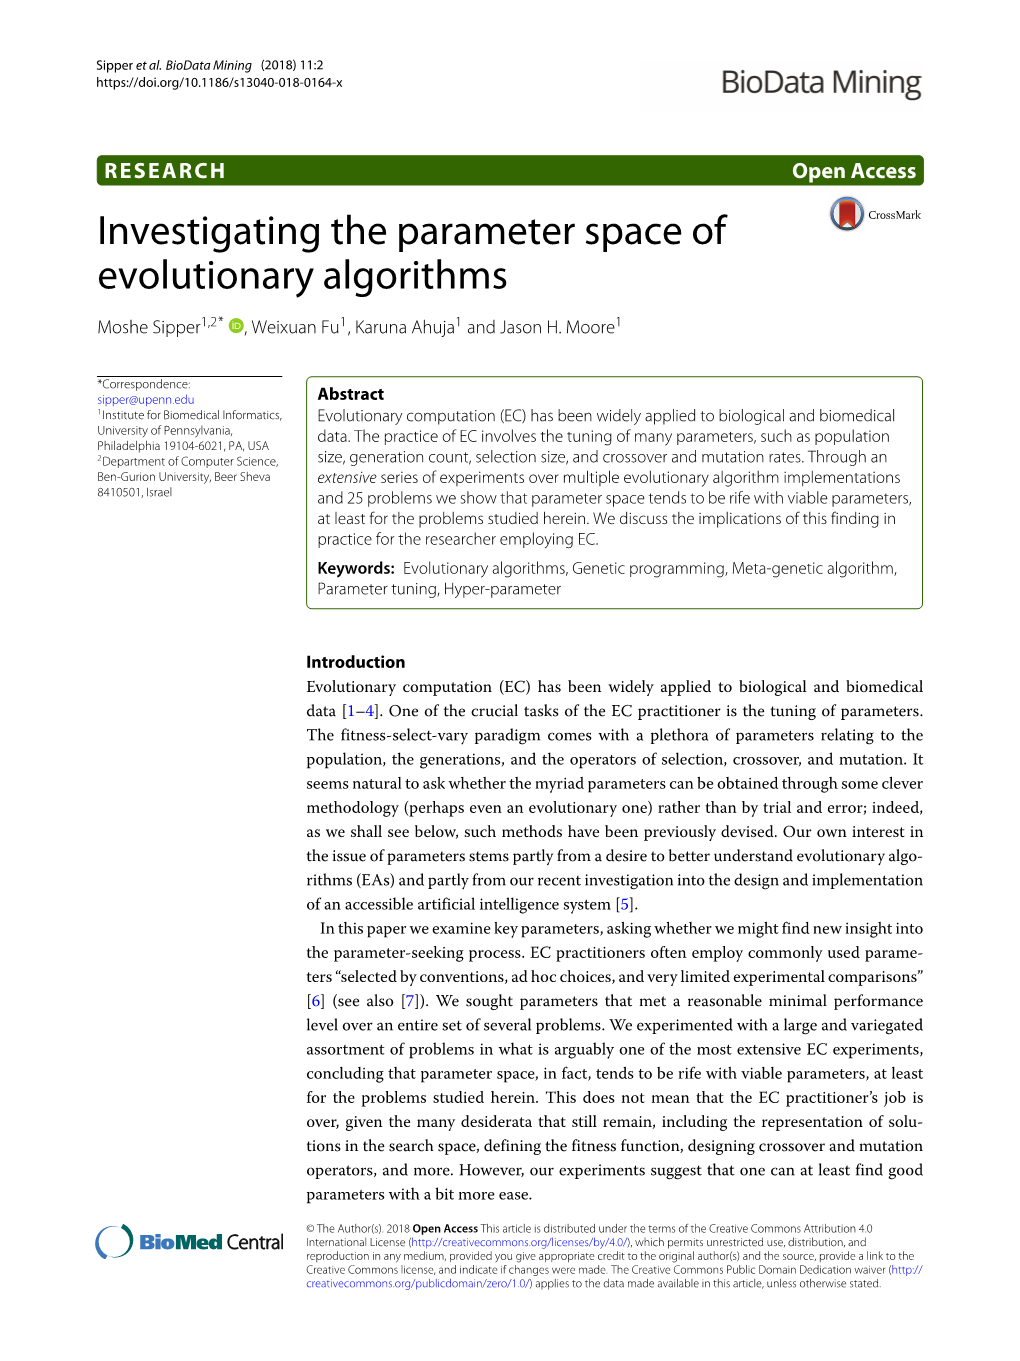 Investigating the Parameter Space of Evolutionary Algorithms